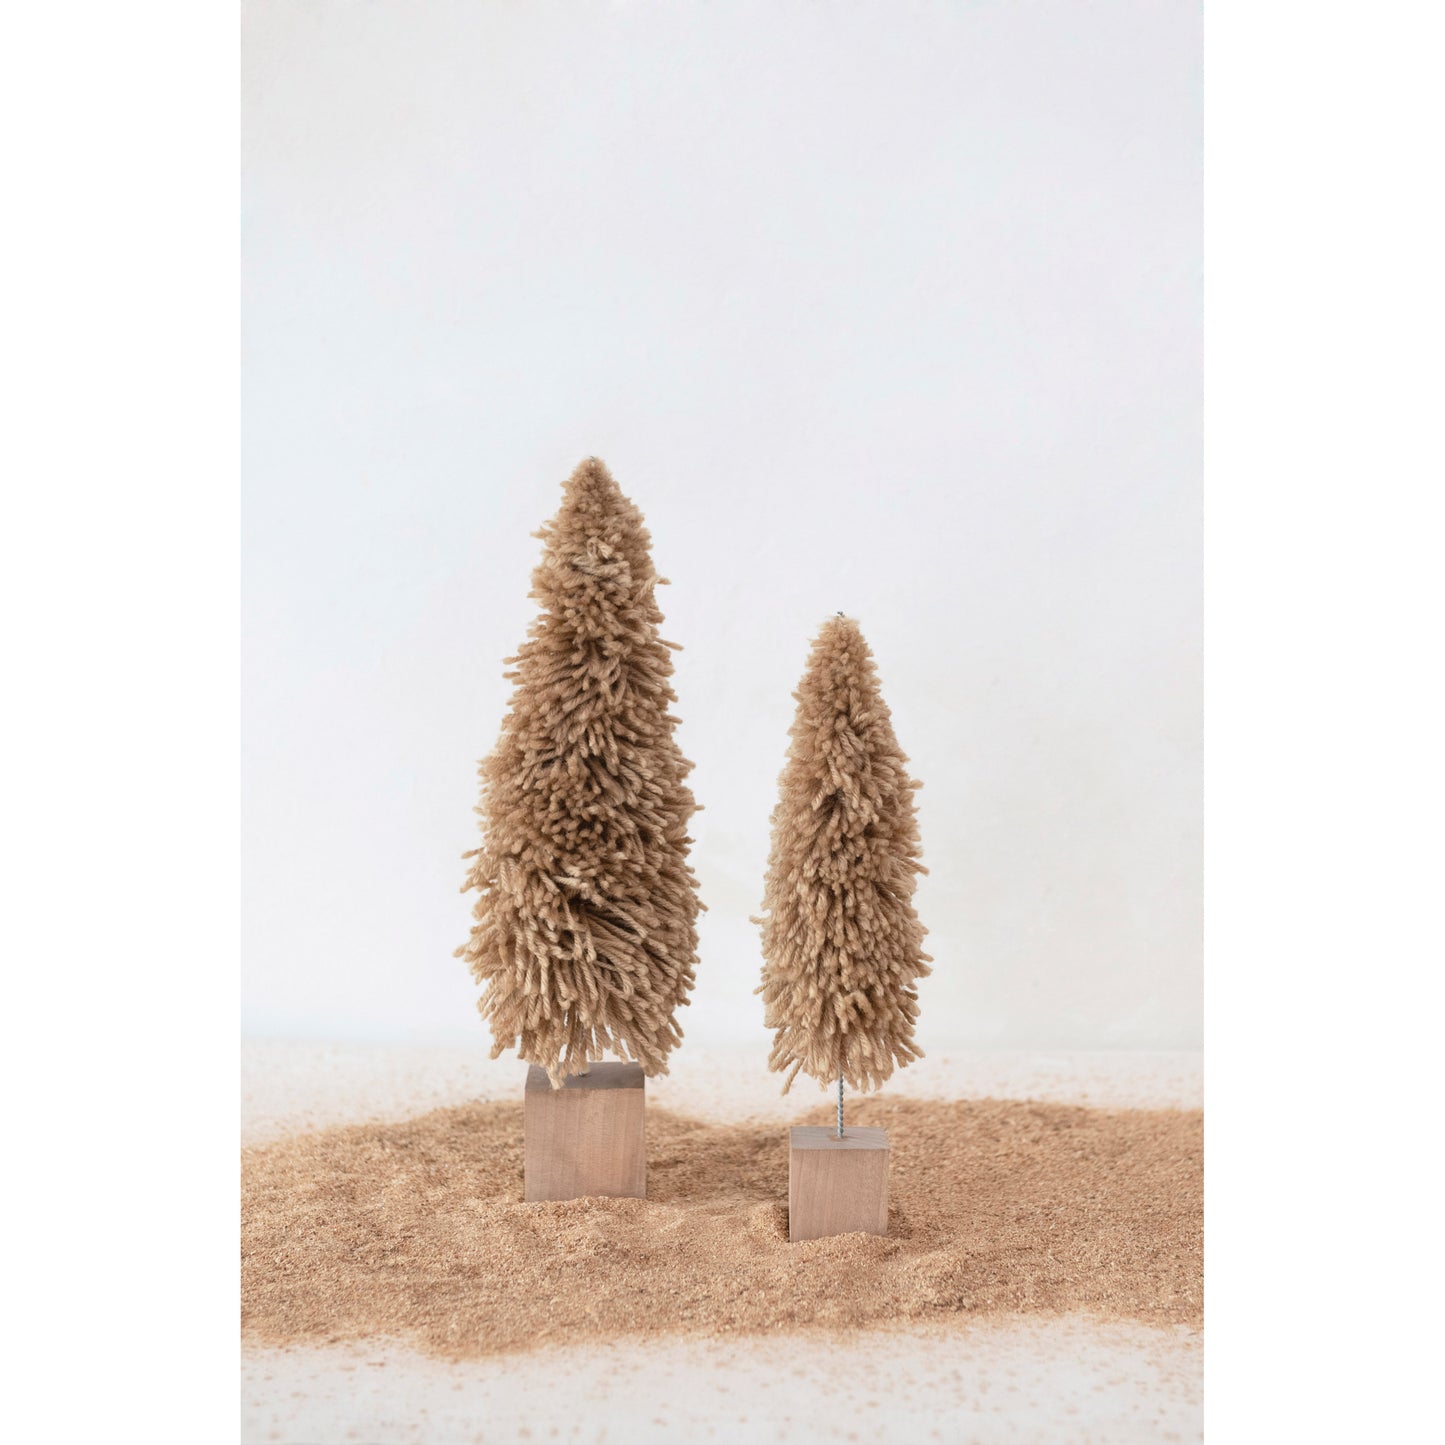 3" Round x 11-3/4"H Fabric Yarn Tree with Wood Block Base